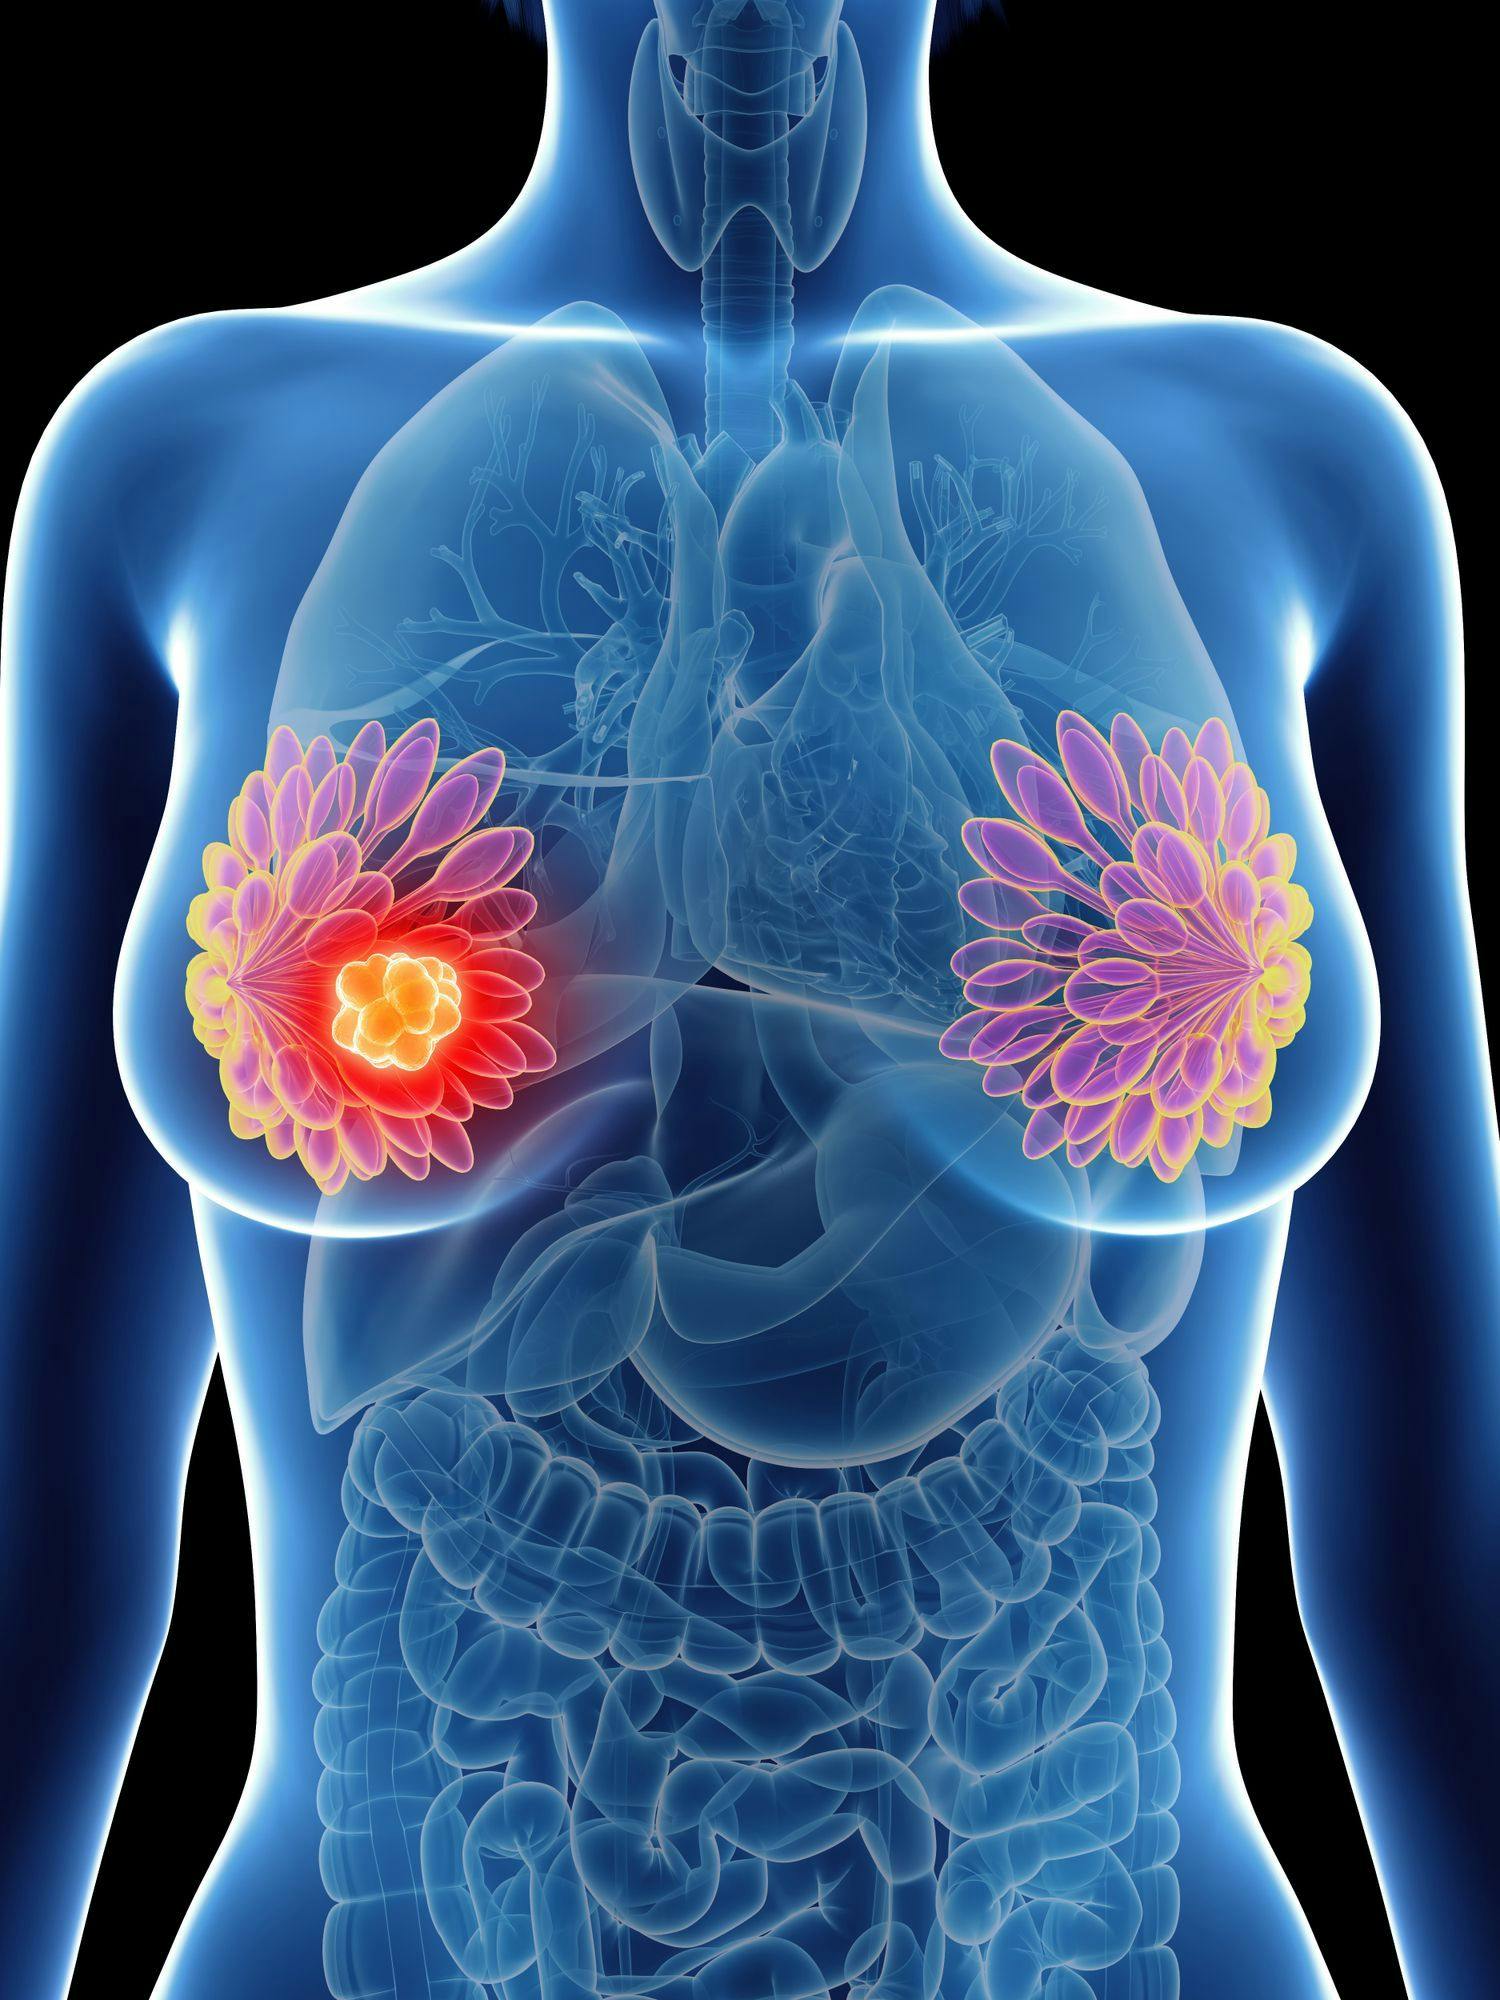 FDA Approves Dose-Escalation Label Amendment for Neratinib in HER2+ Breast Cancer 